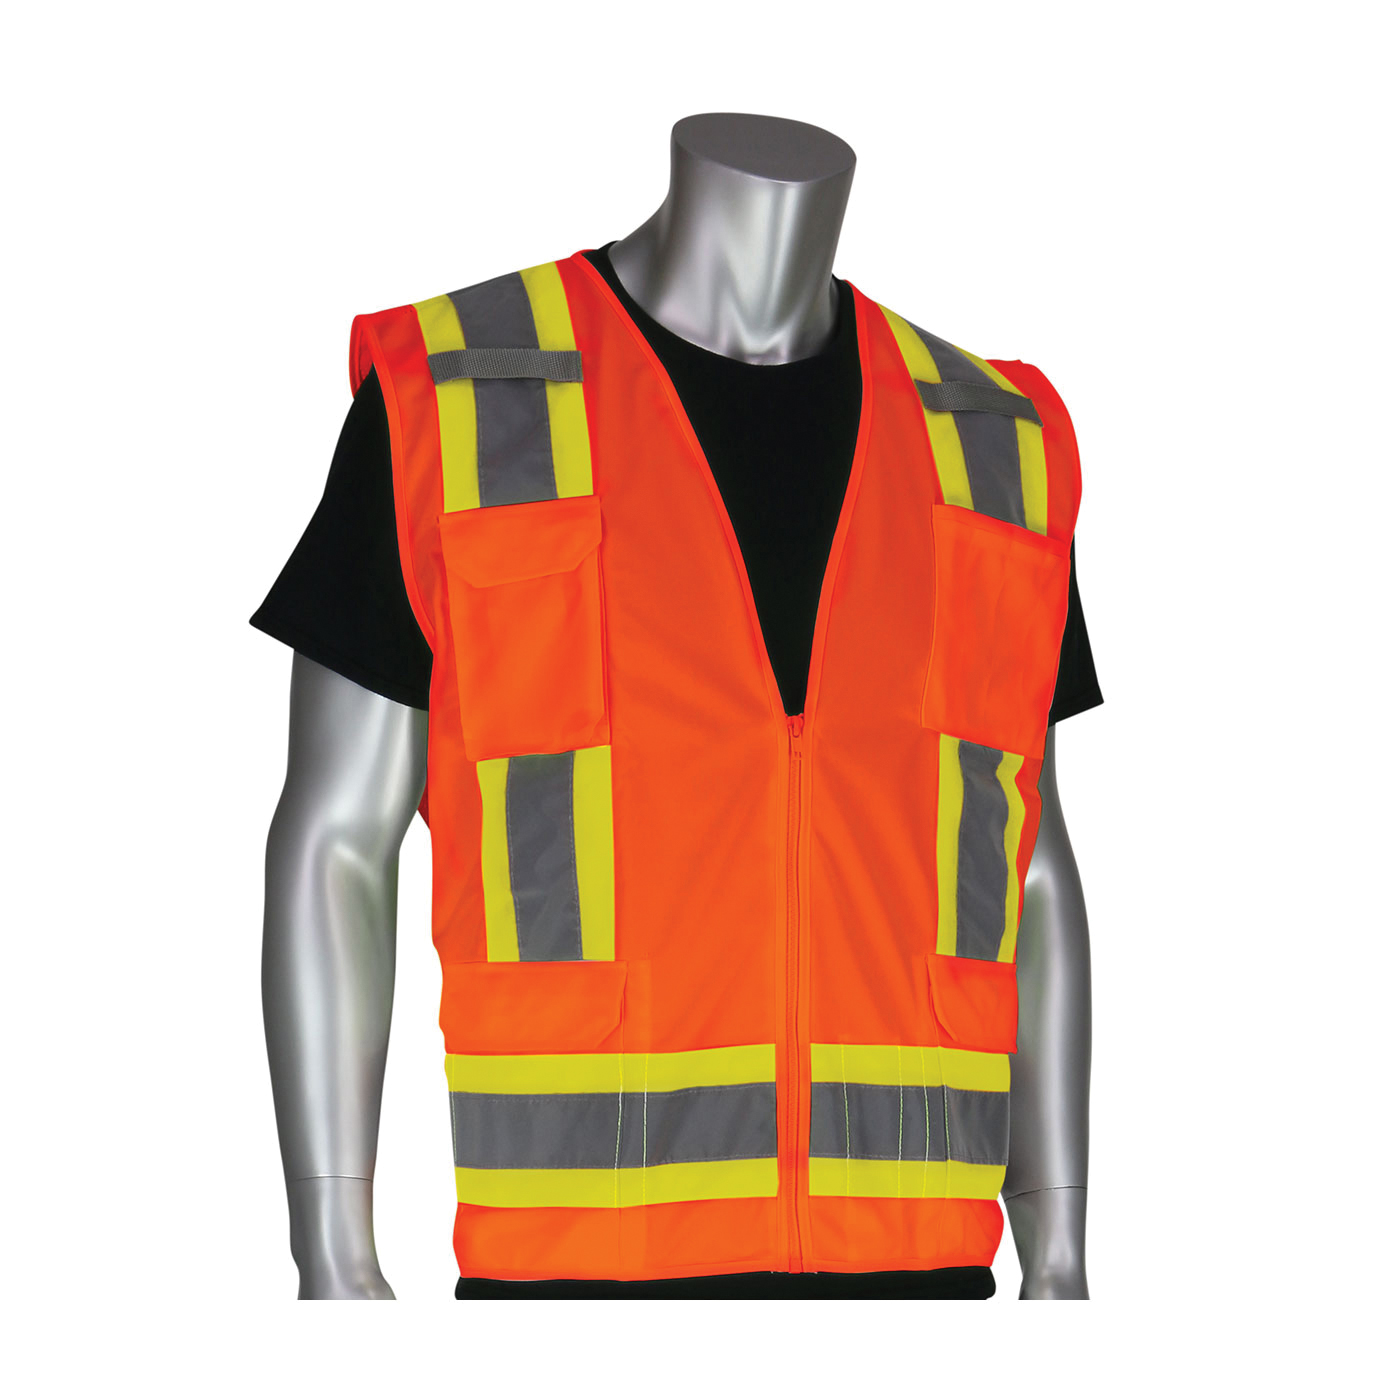 PIP® 302-0500S-ORG/S 2-Tone Surveyor Safety Vest, S, Hi-Viz Orange, Polyester/Solid Tricot, Zipper Closure, 11 Pockets, ANSI Class: Class 2, Specifications Met: ANSI 107 Type R